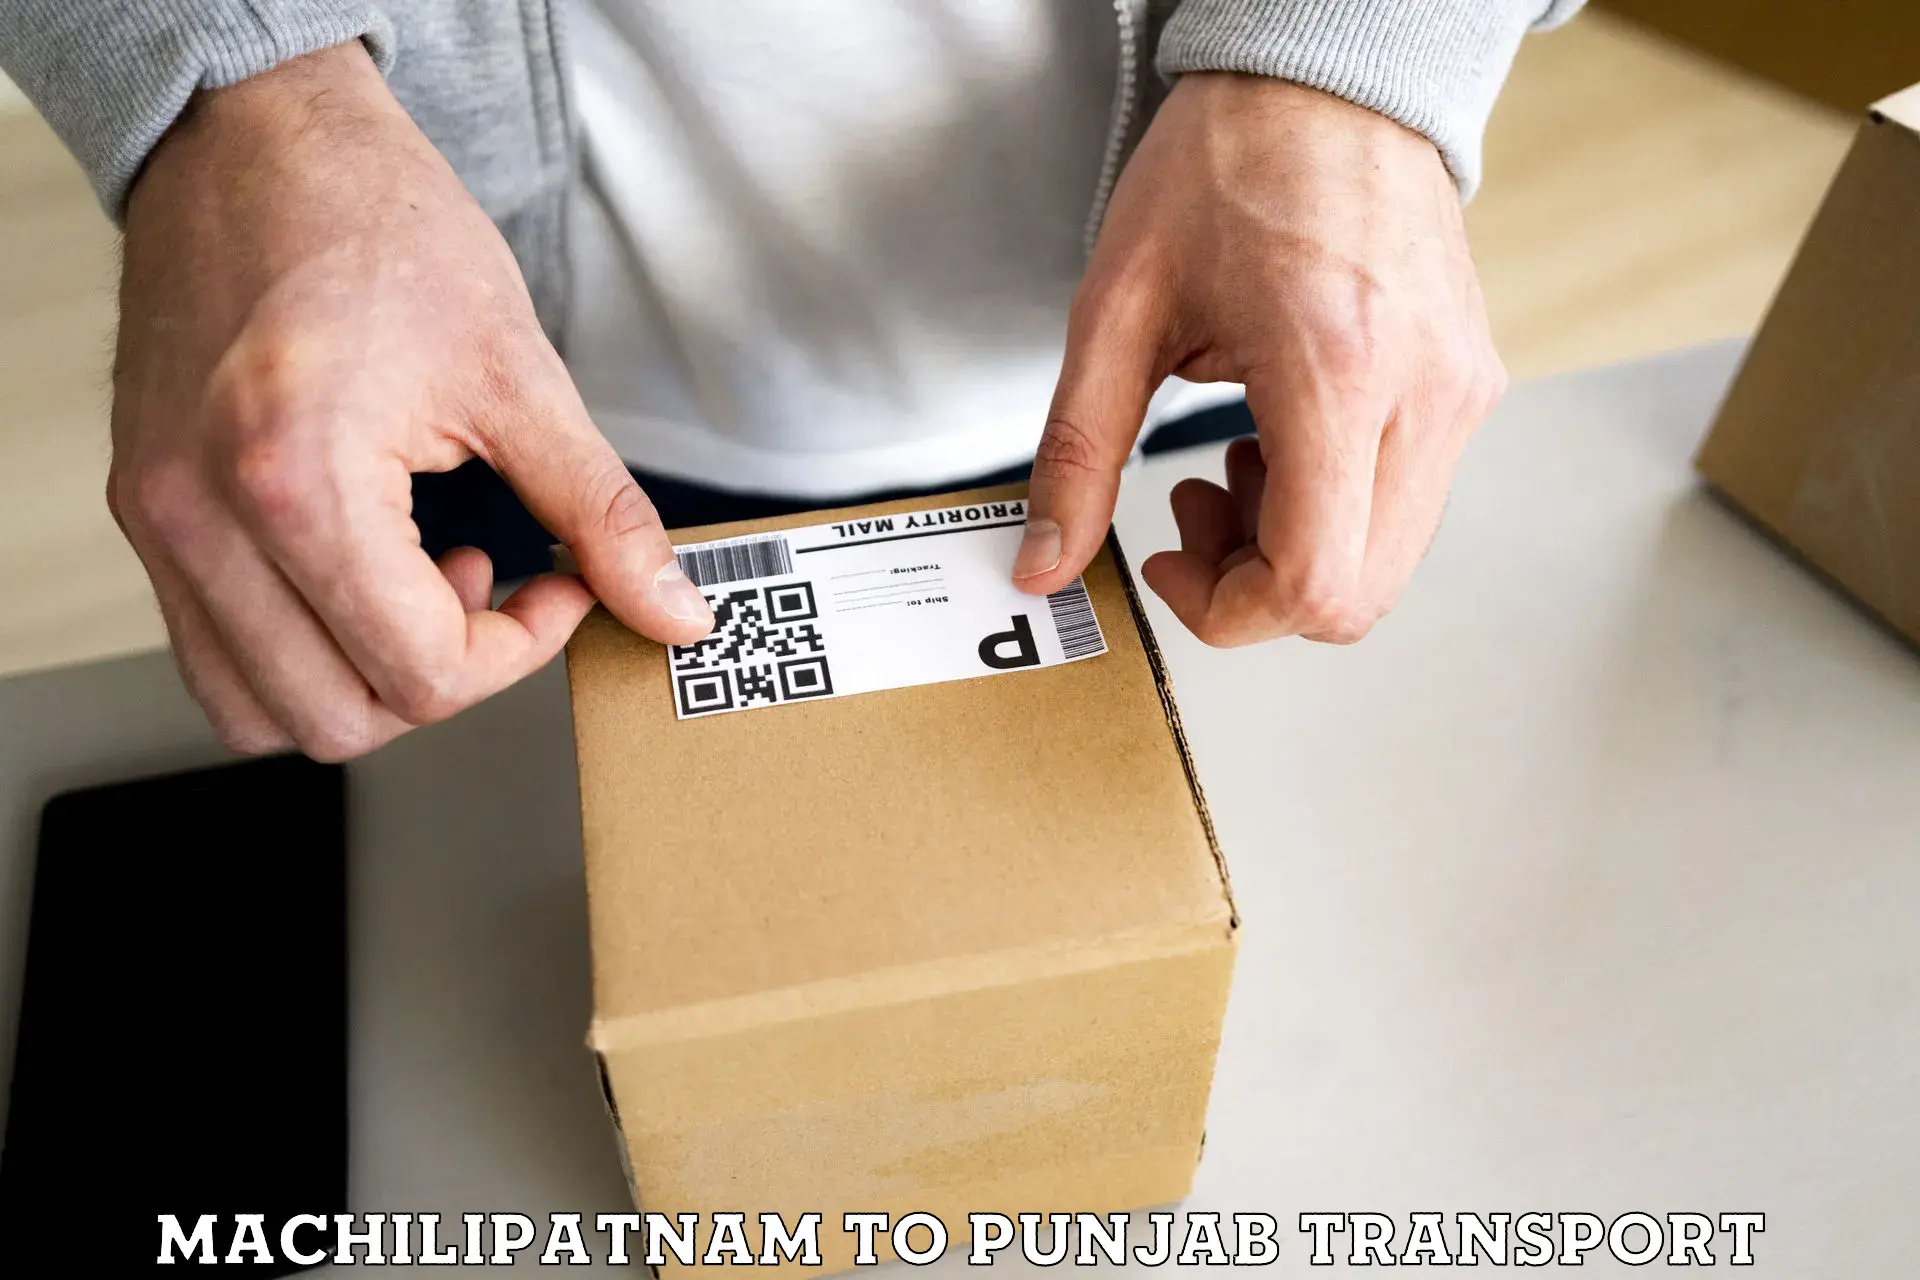 Transport in sharing Machilipatnam to Punjab